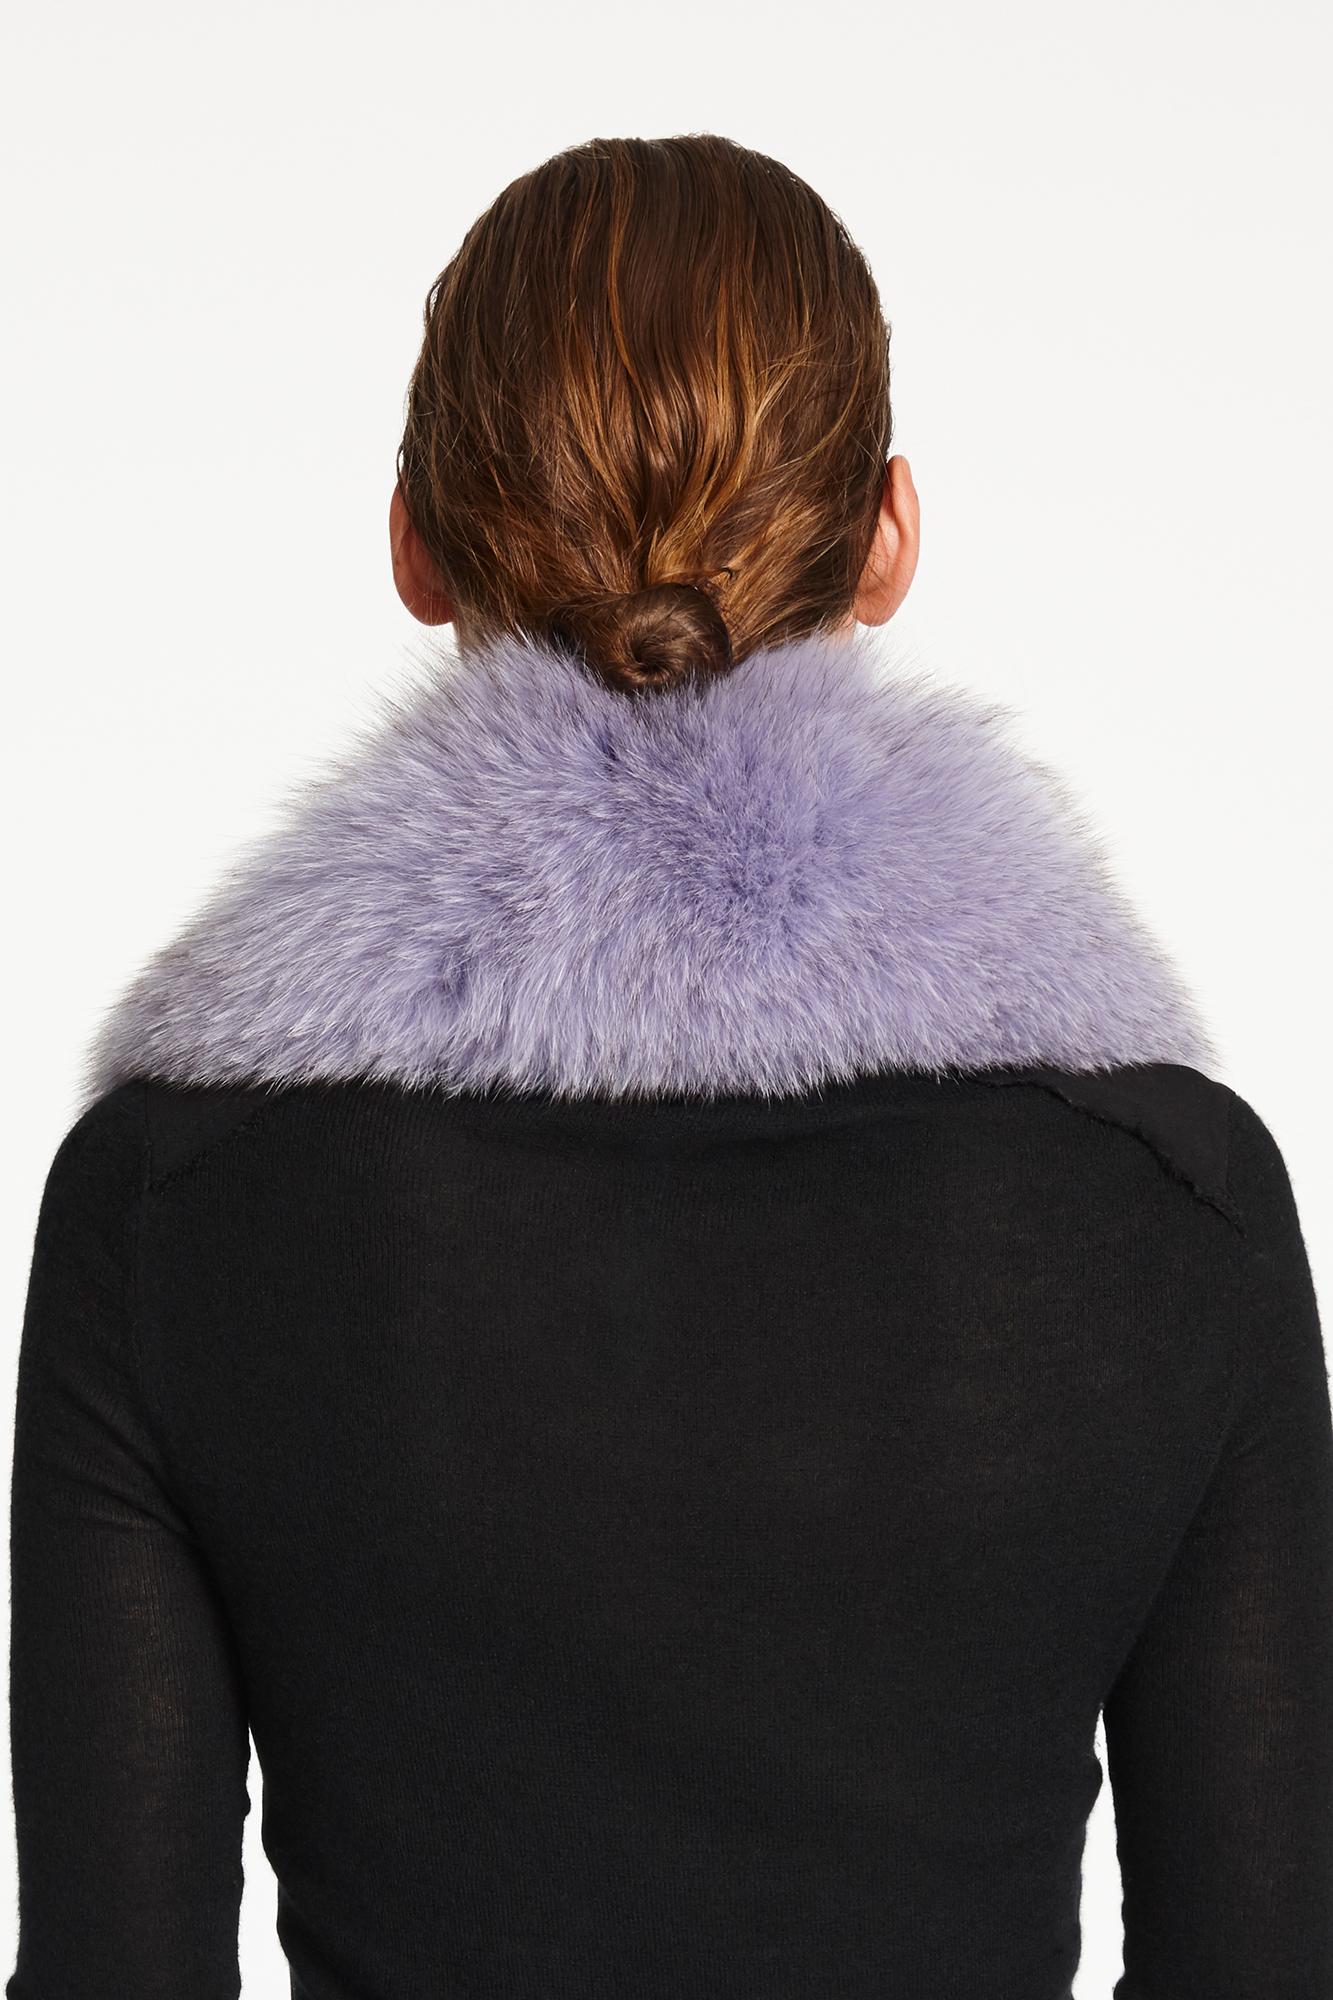 Verheyen London Peter Pan Collar in Lilac Fox Fur - Brand New  3